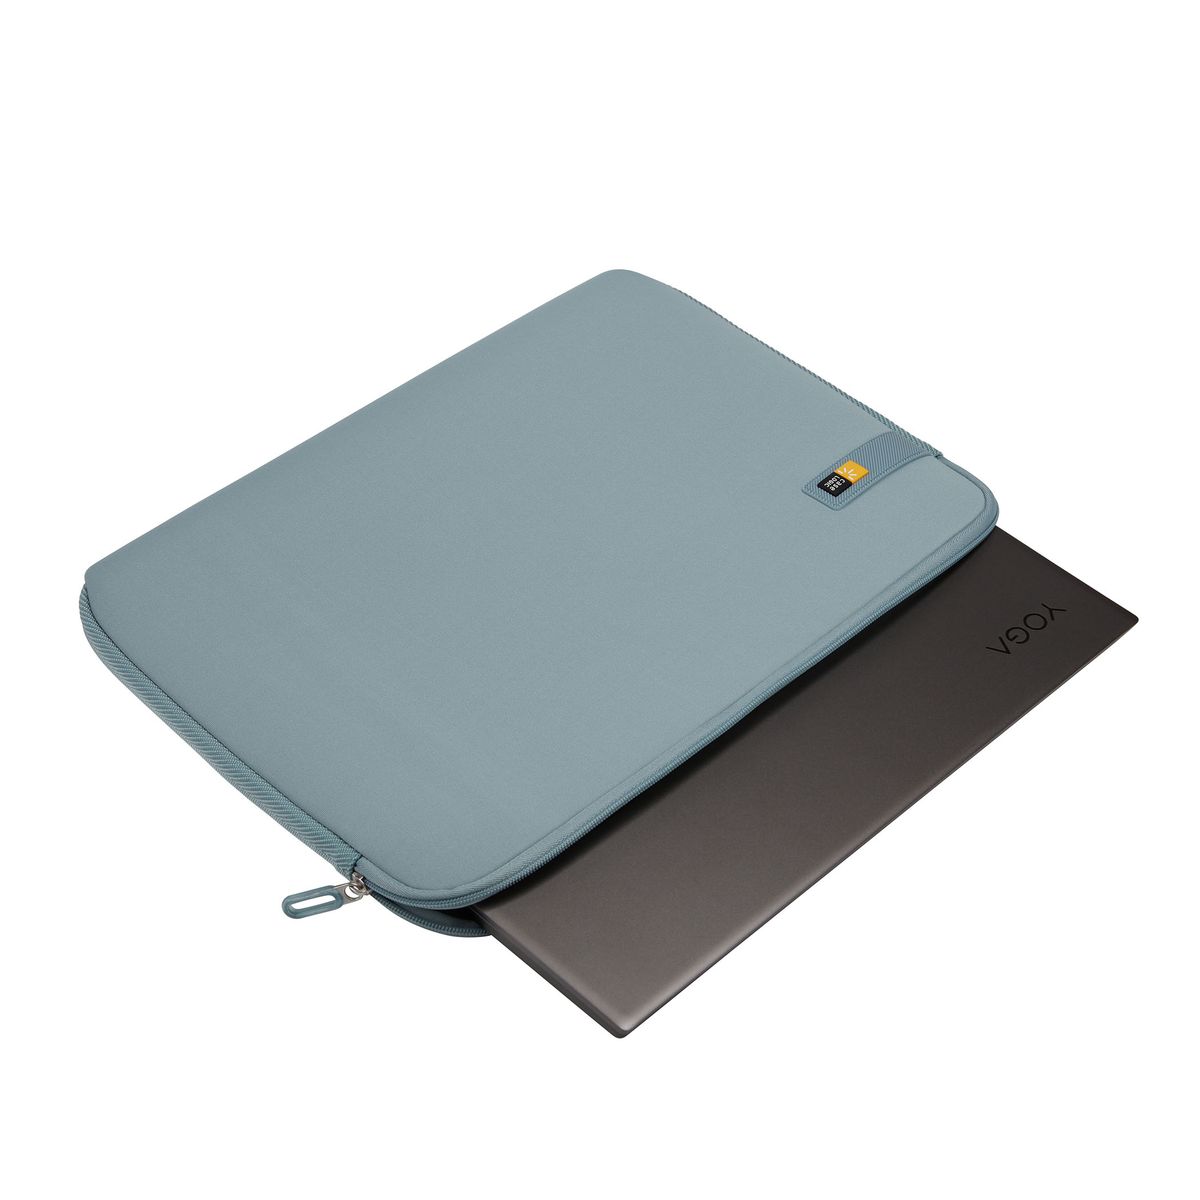 Case Logic Laptop Sleeve 15-16" laptop sleeve